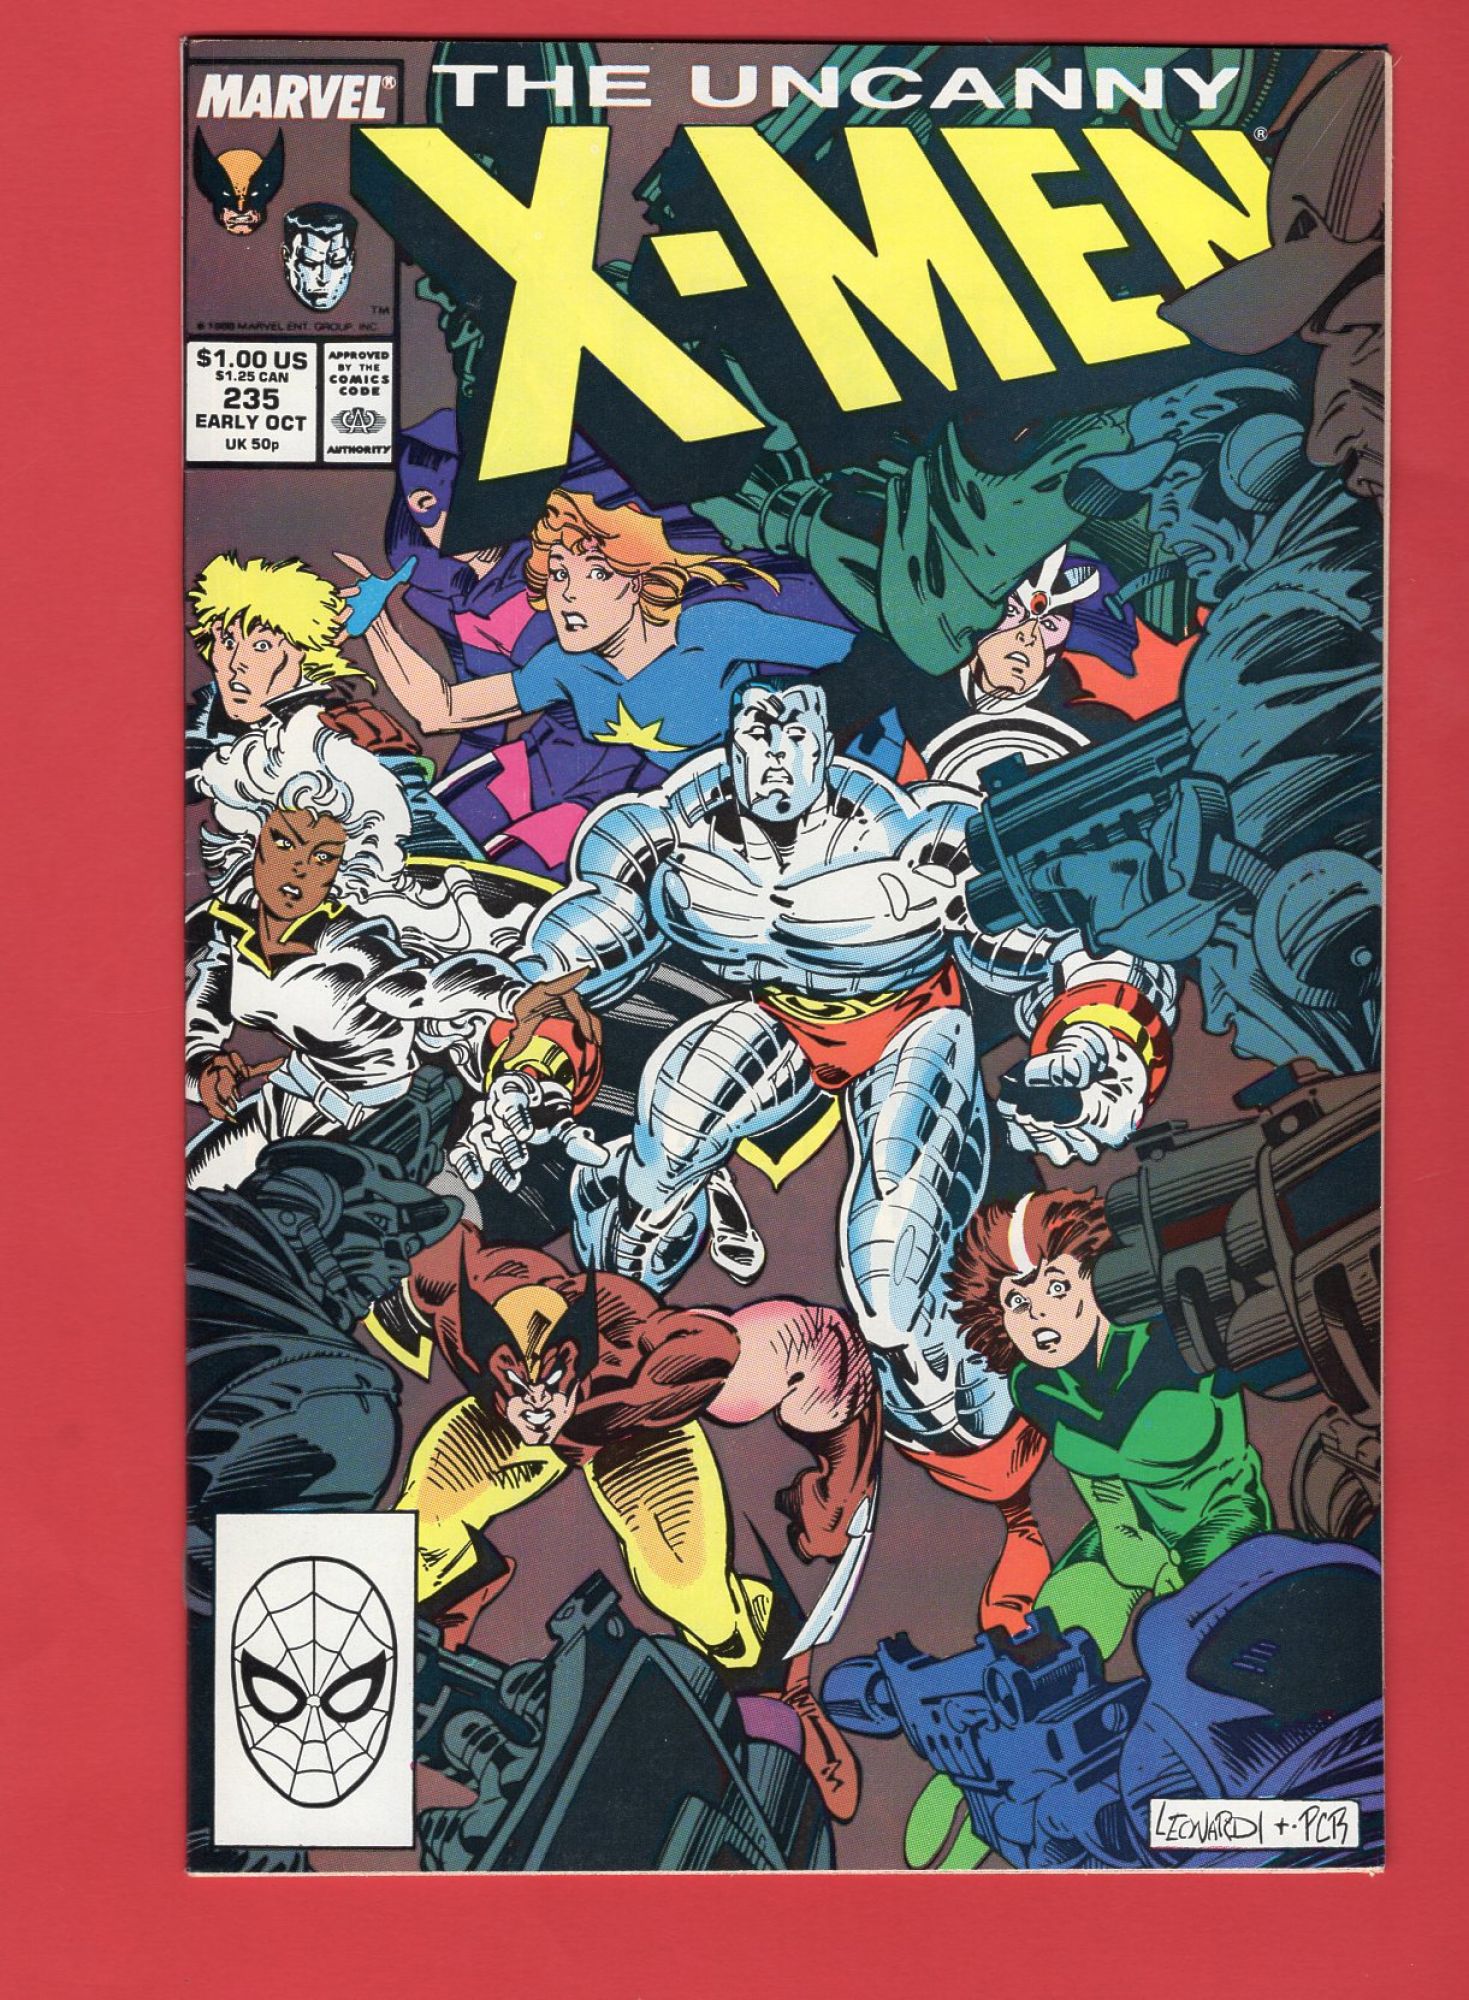 Uncanny X-Men #235, Oct 1988, 8.5 VF+